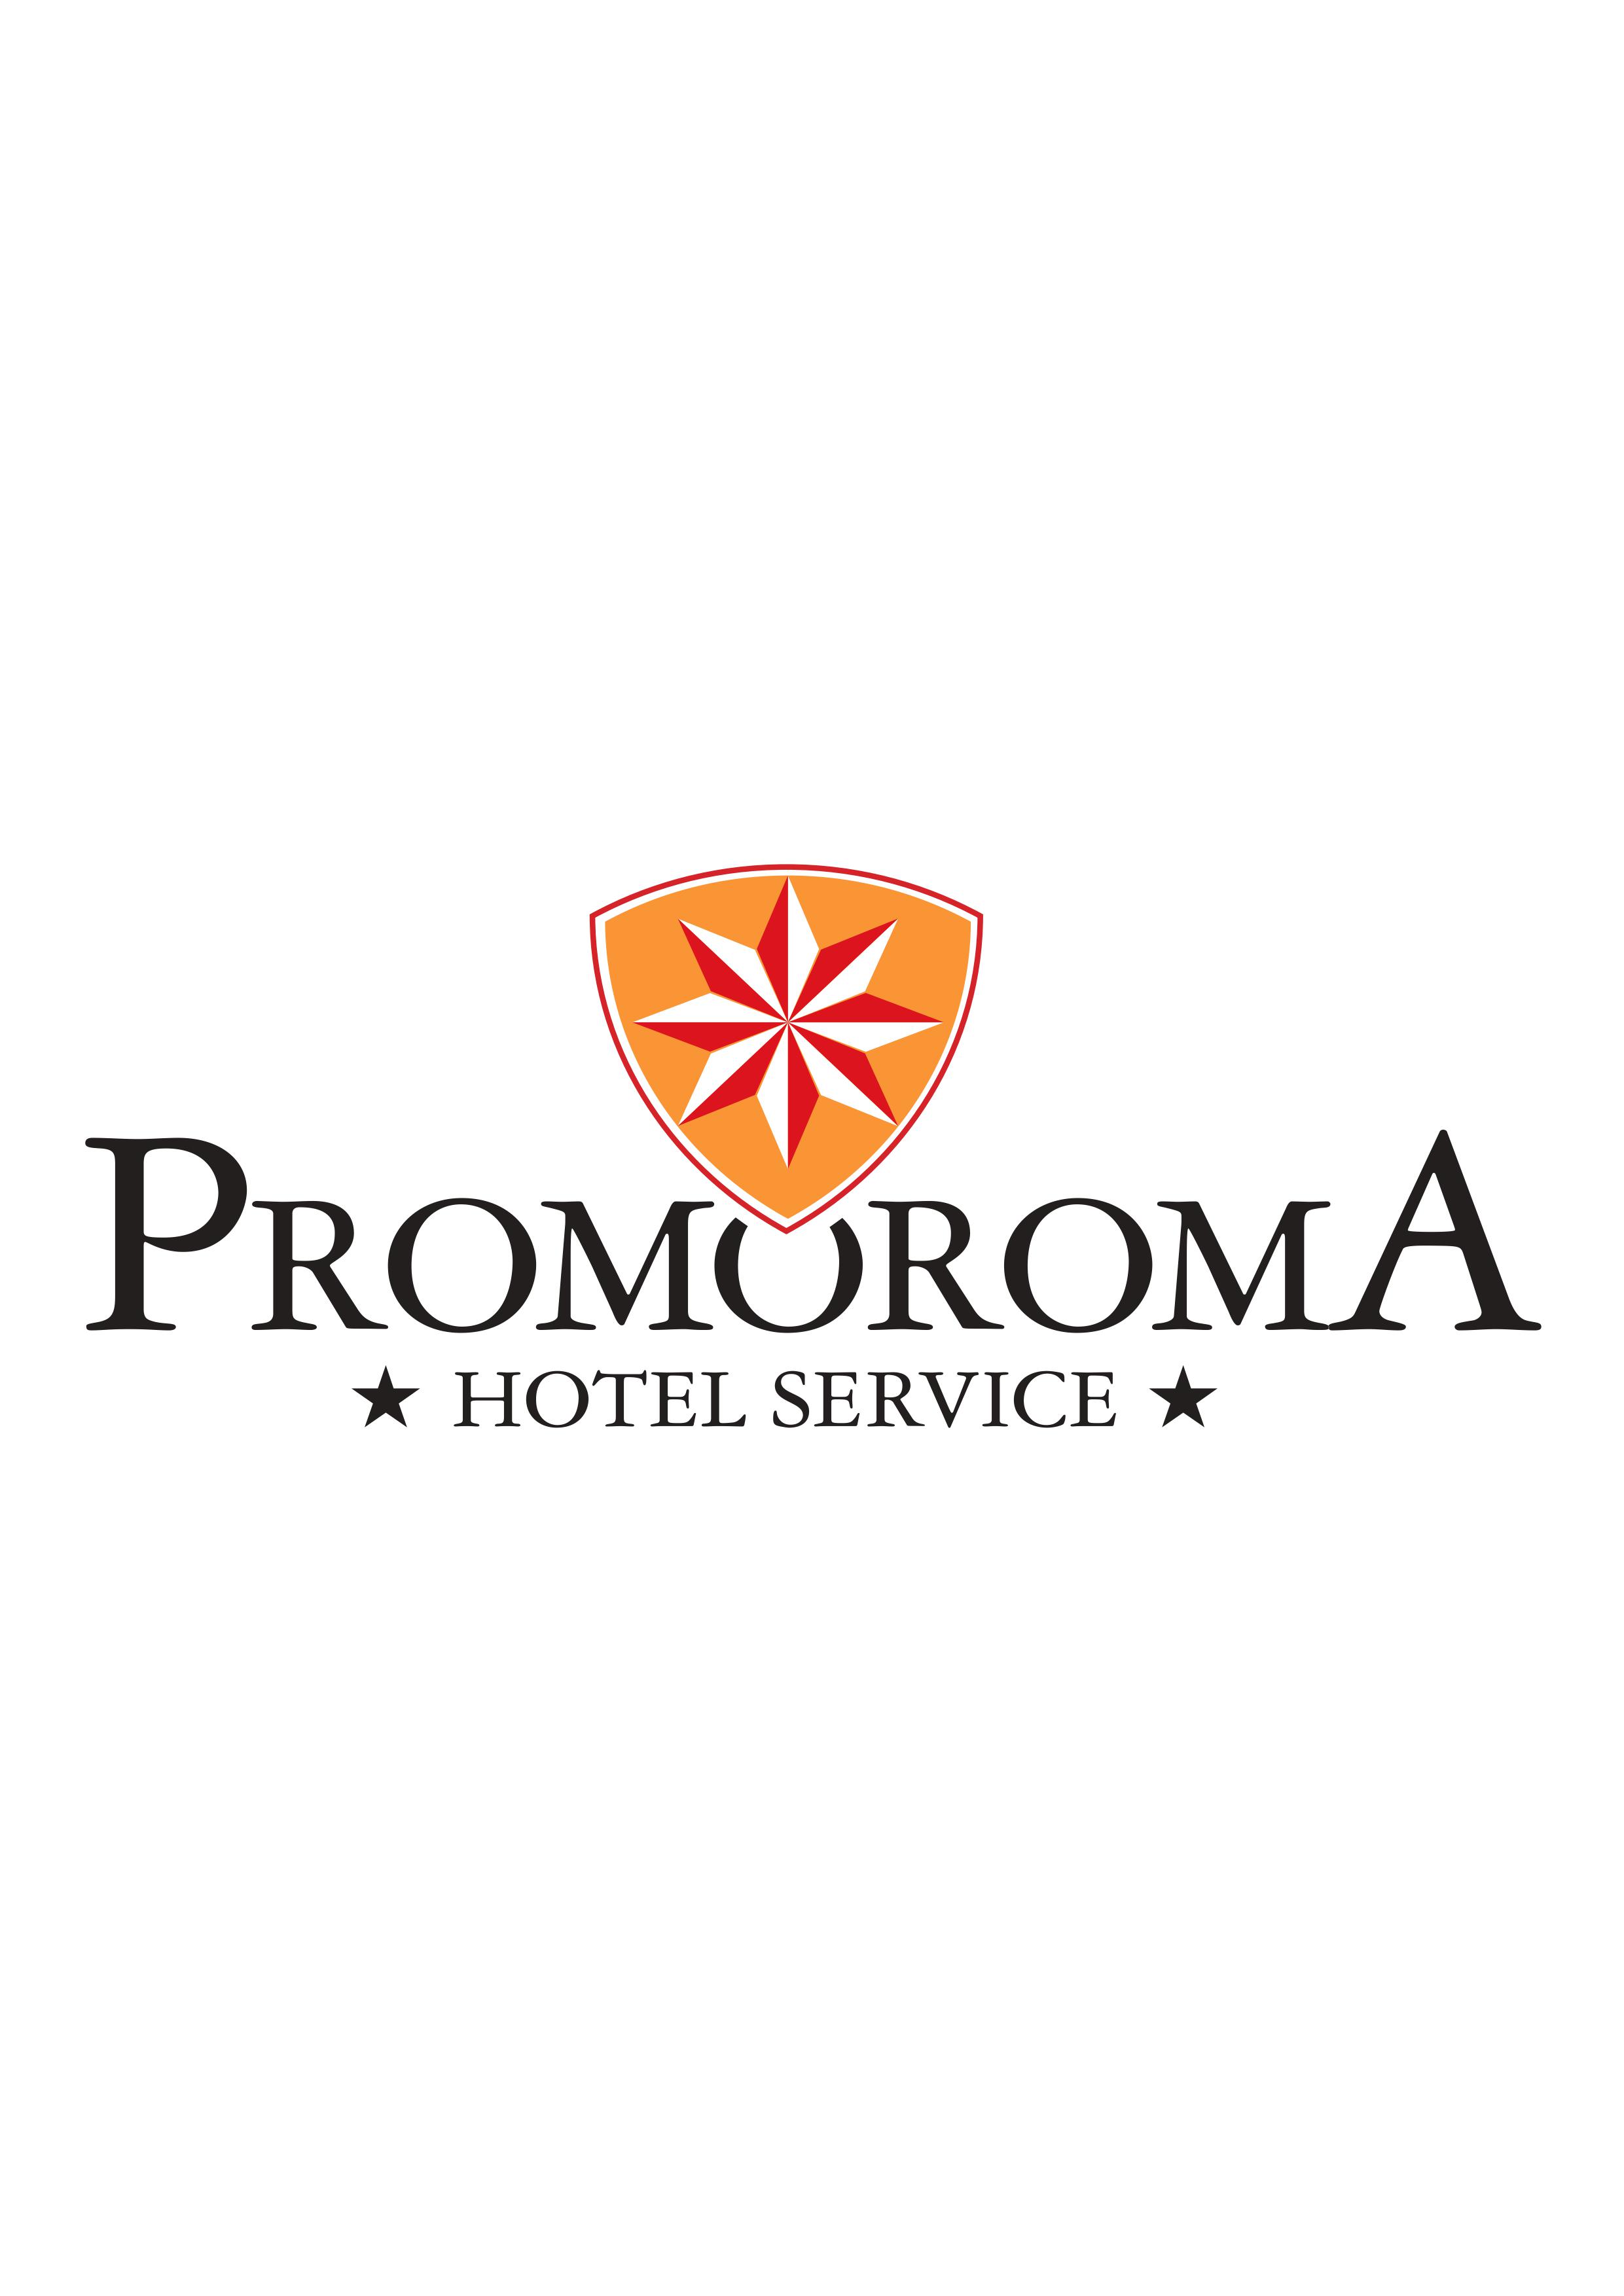 Logo - PROMOROMA HOTEL SERVICE